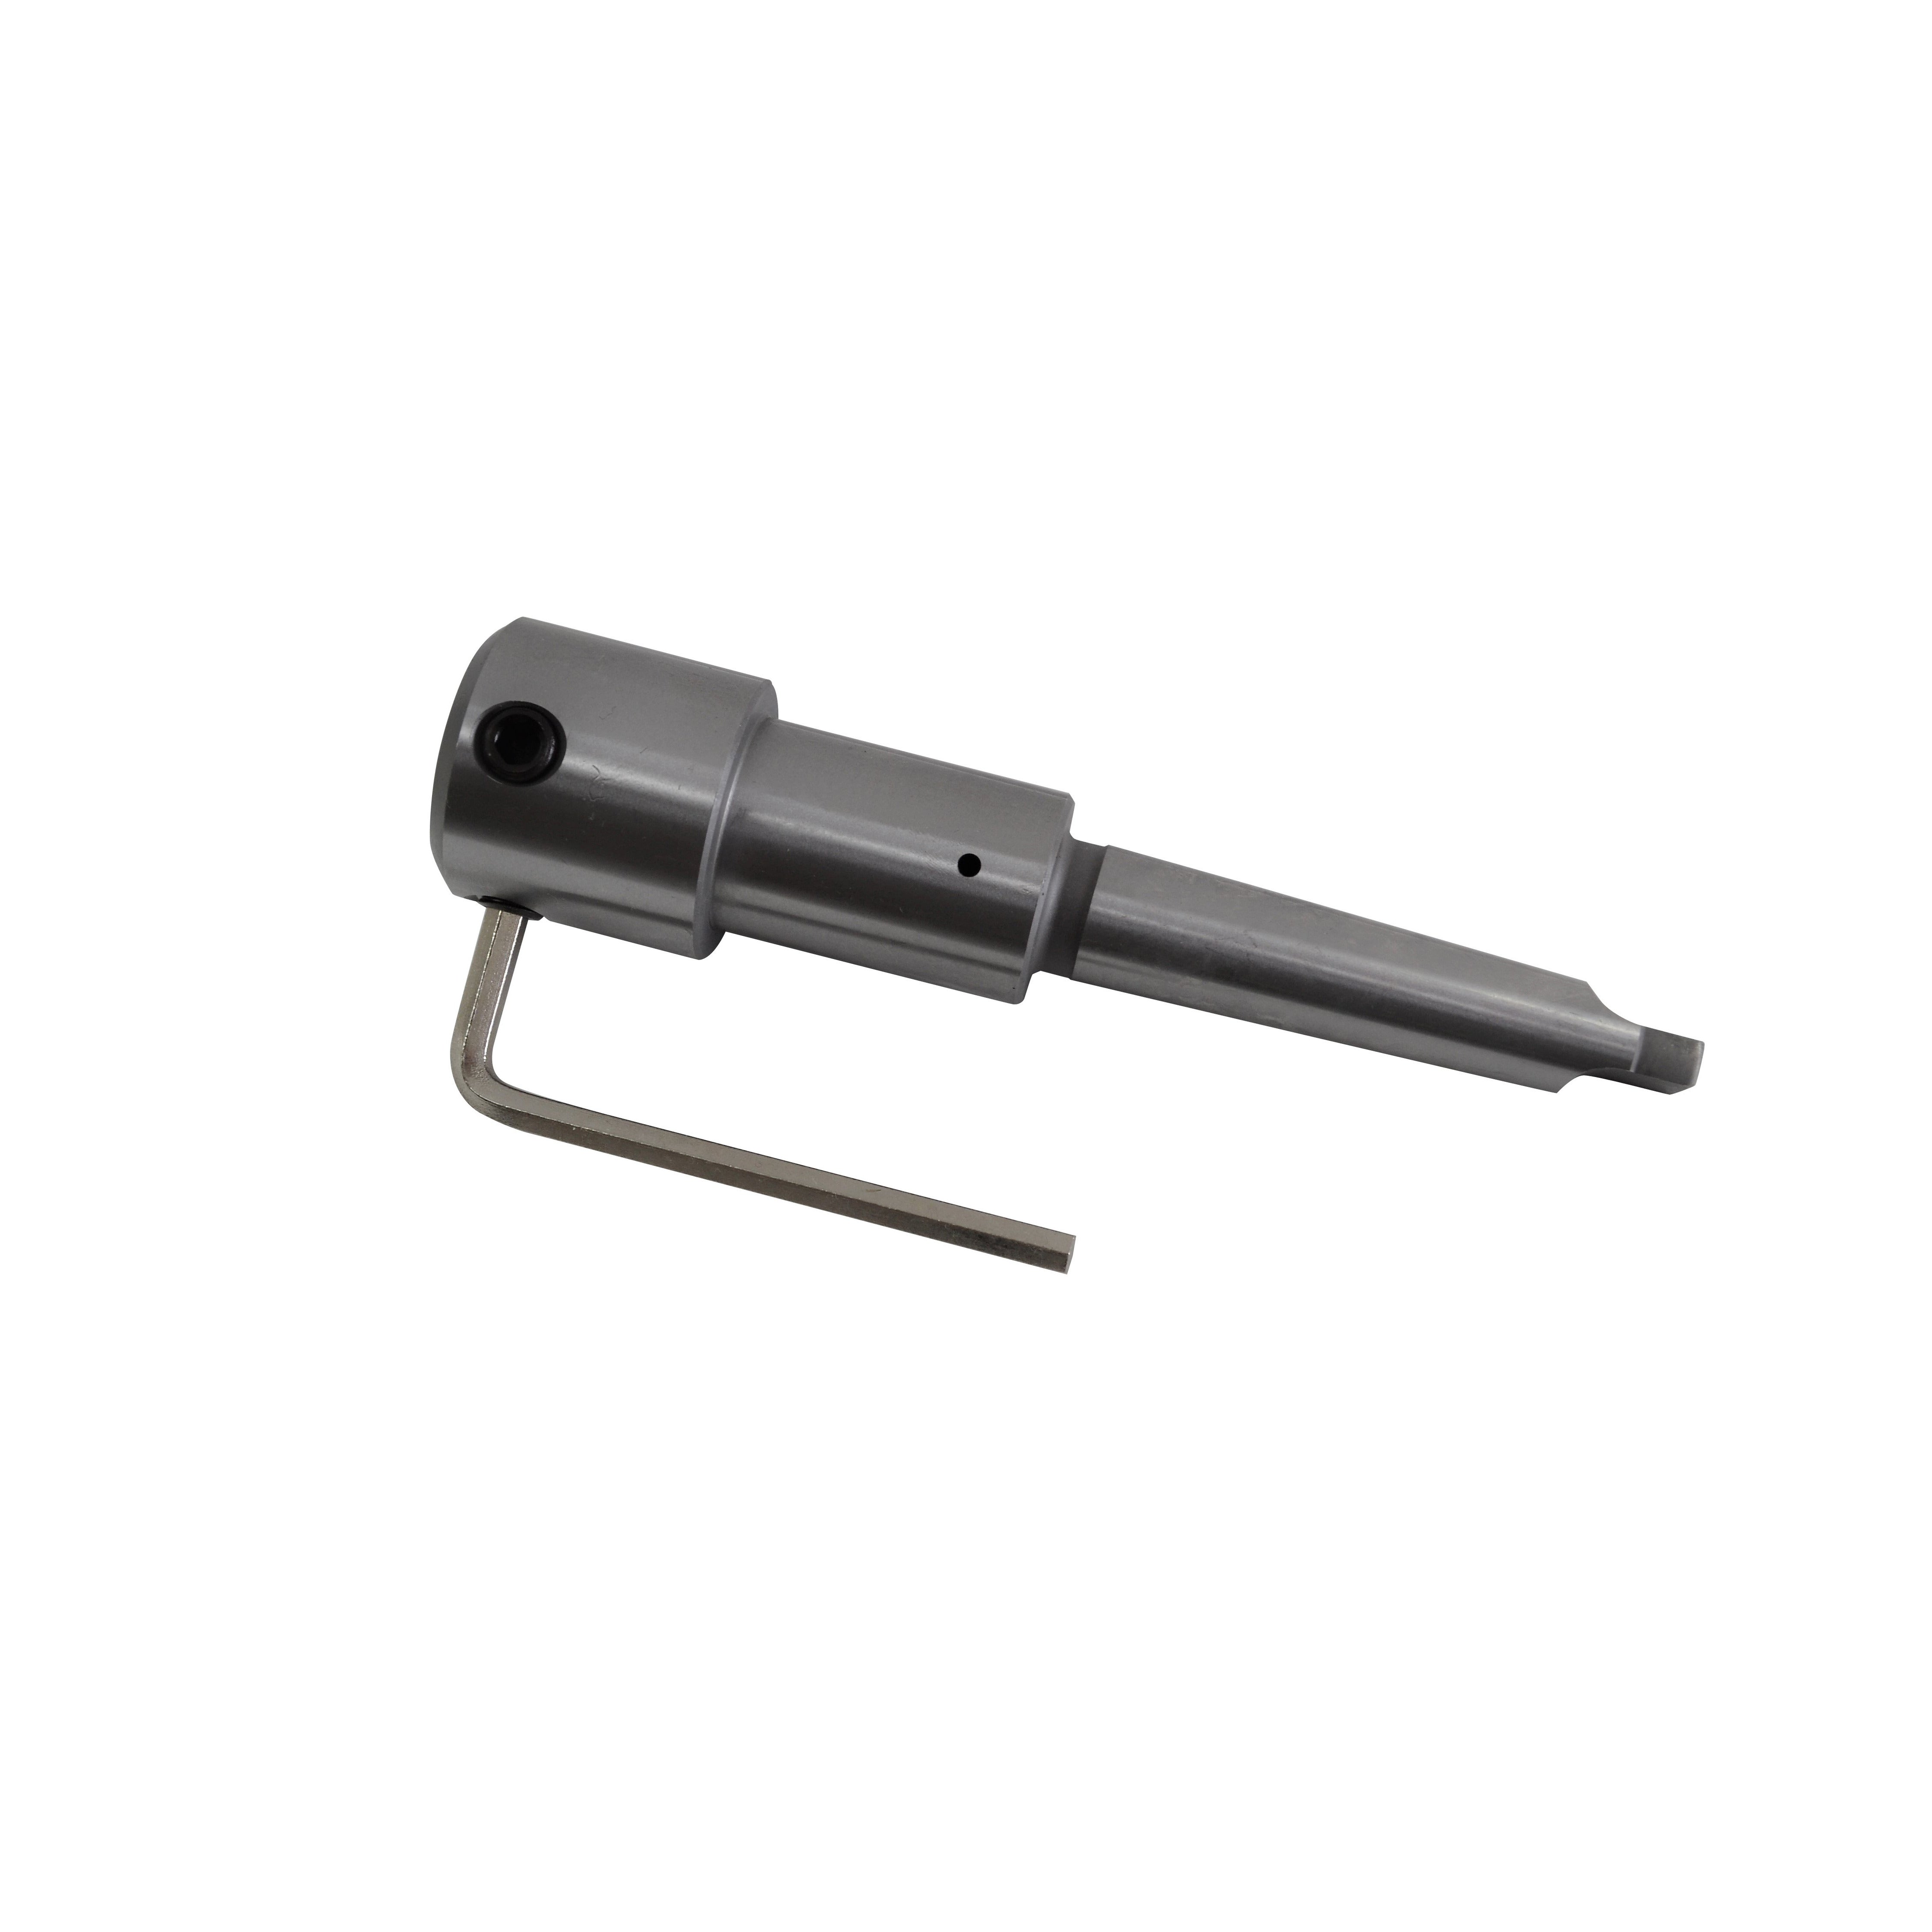 weldon holder 3/4" 19mm MT2 rota broach annular cutter adaptor morse tapper 2 hardware drill parts drill bits industrial